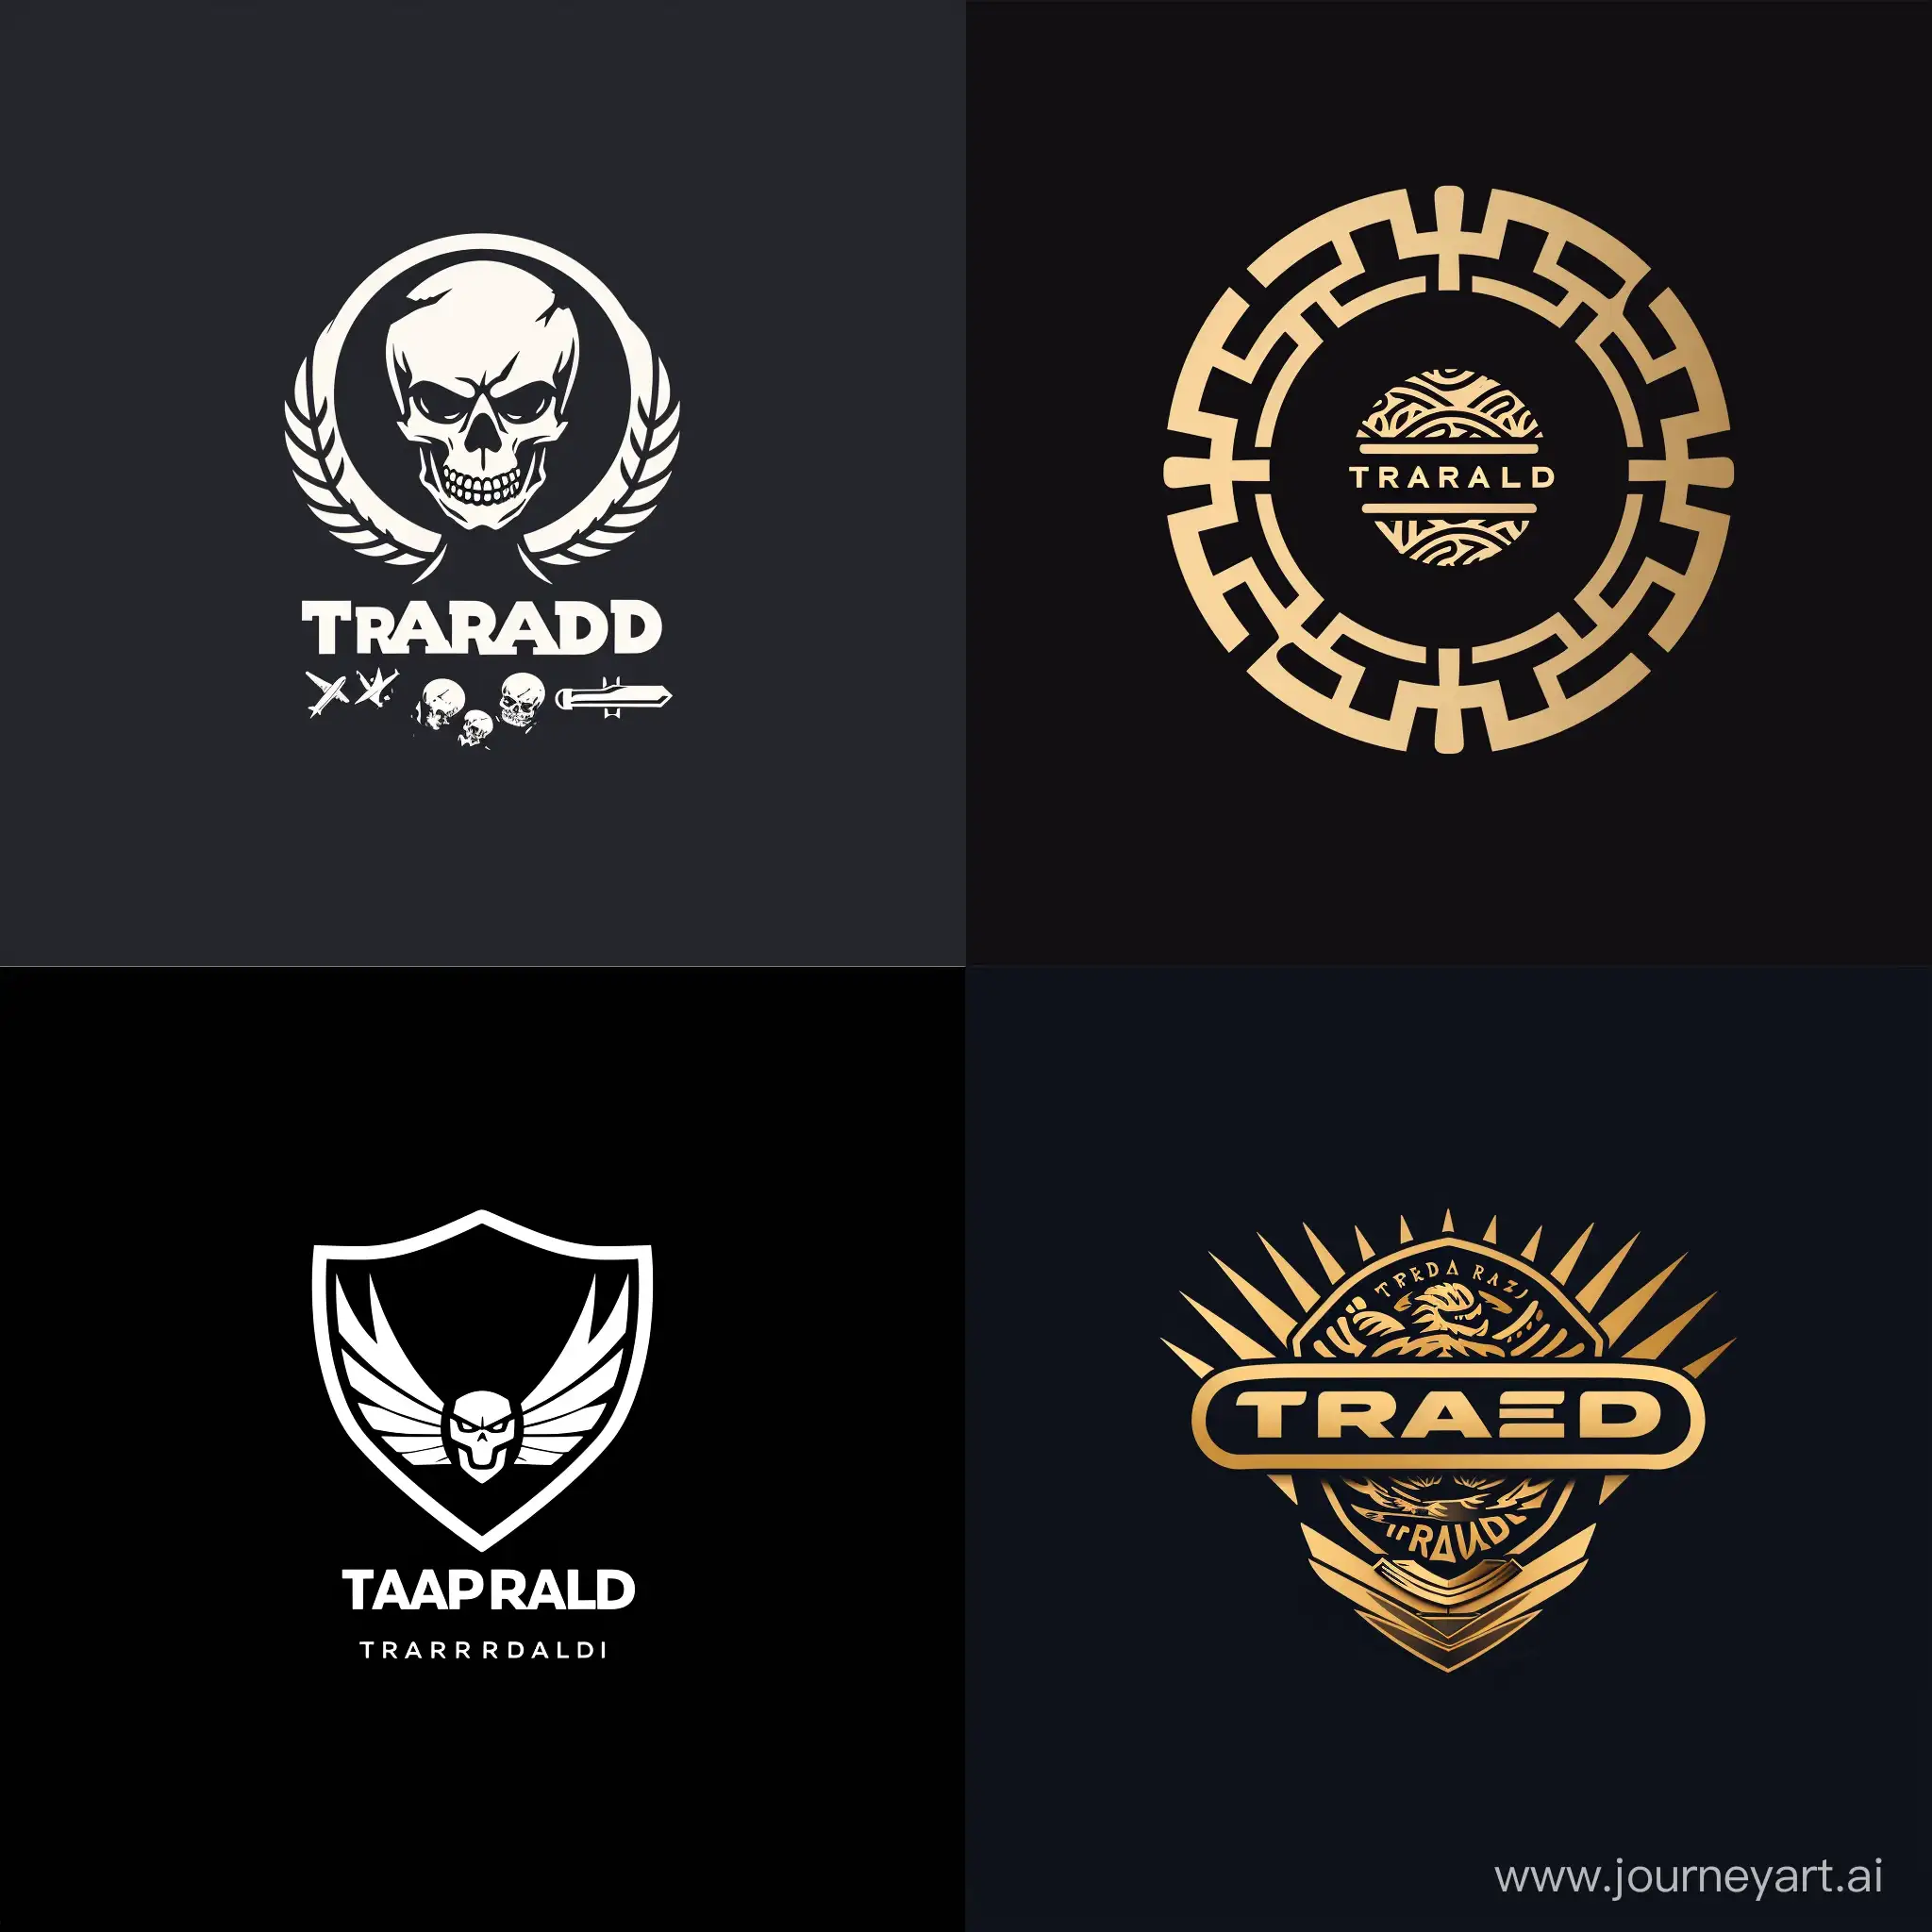 Trade-Raid-Company-Logo-with-Version-6-in-a-11-Aspect-Ratio